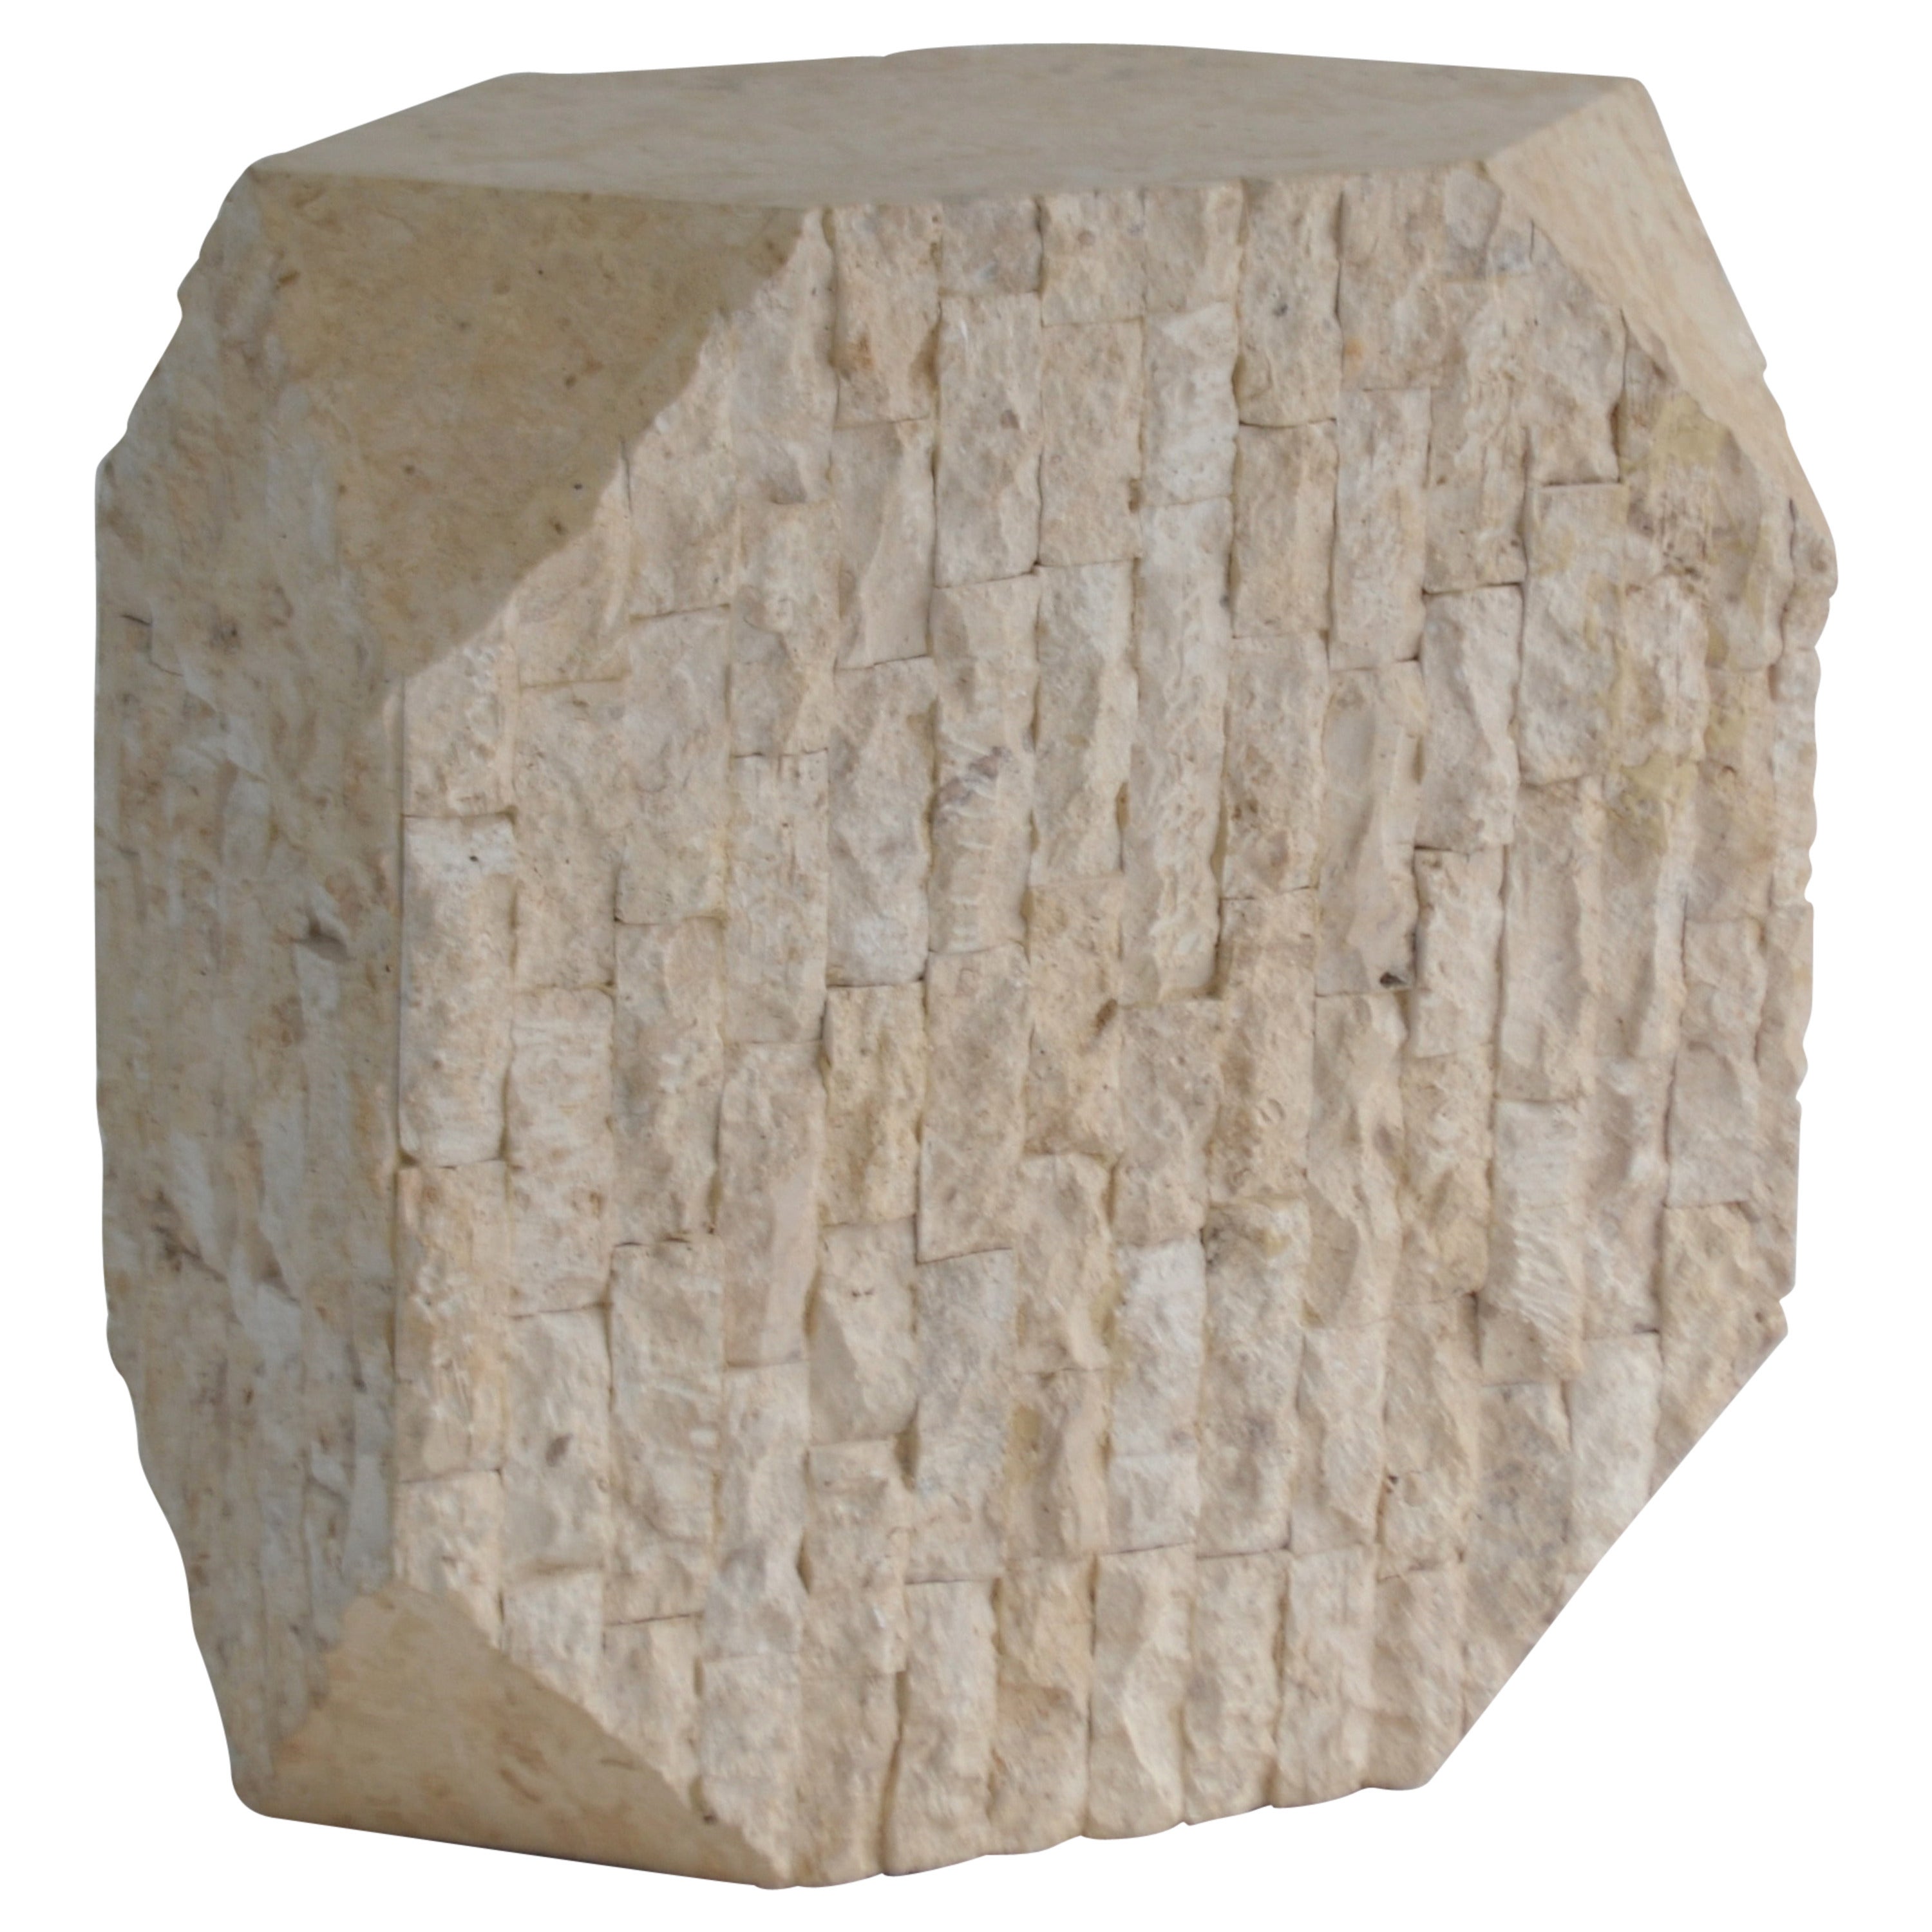 Tessellated Stone and Travertine Pedestal